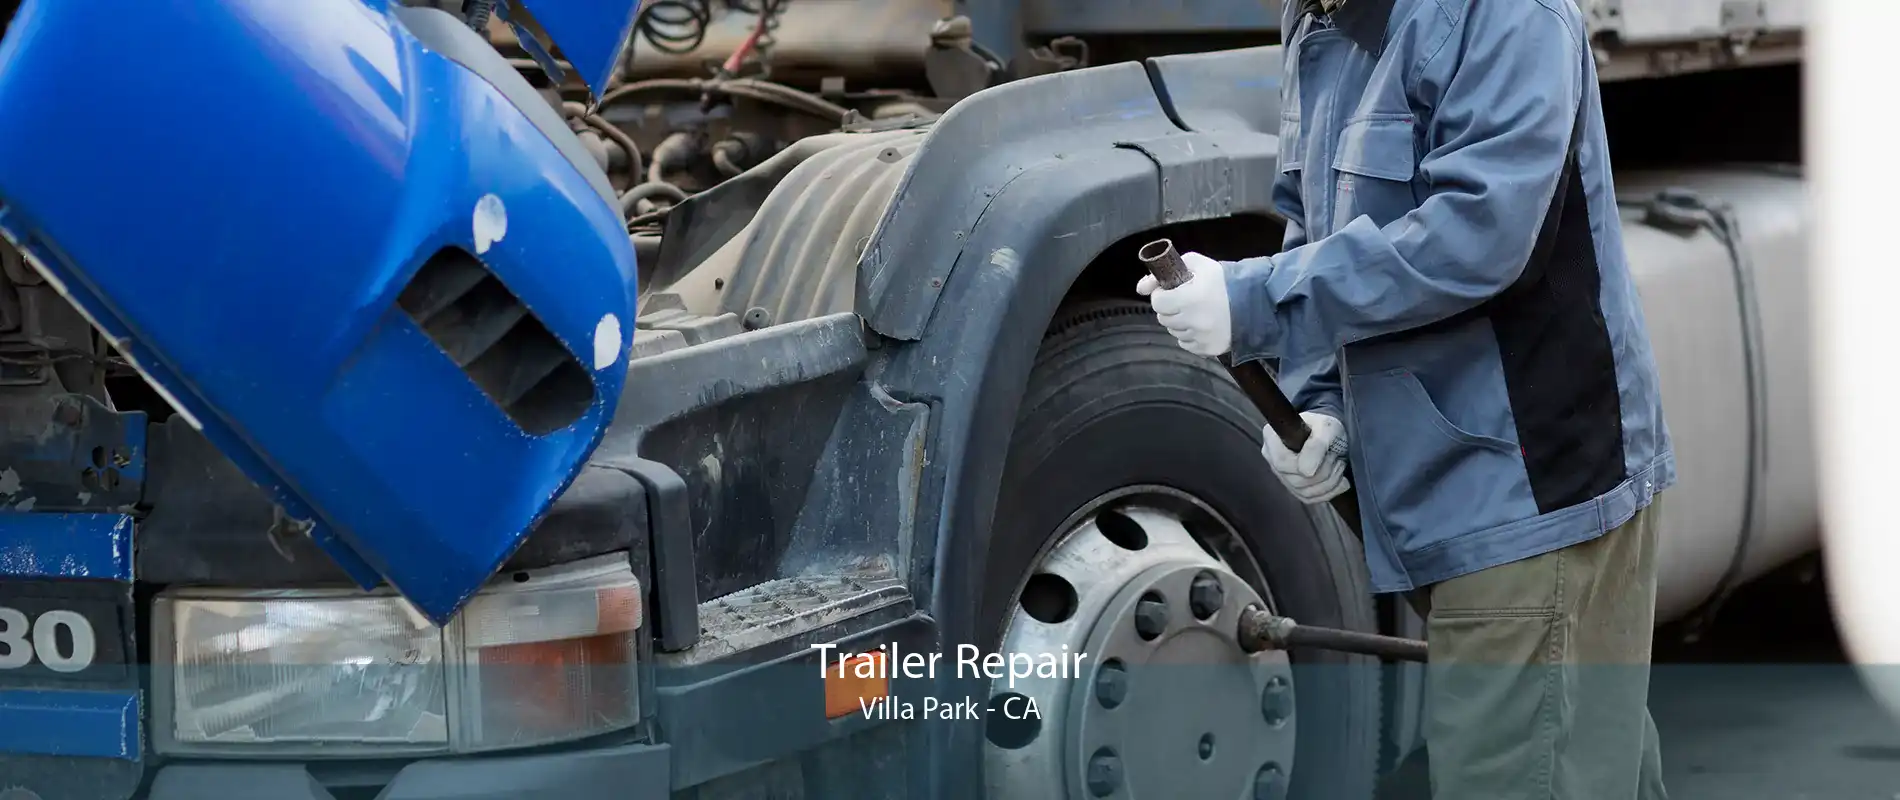 Trailer Repair Villa Park - CA